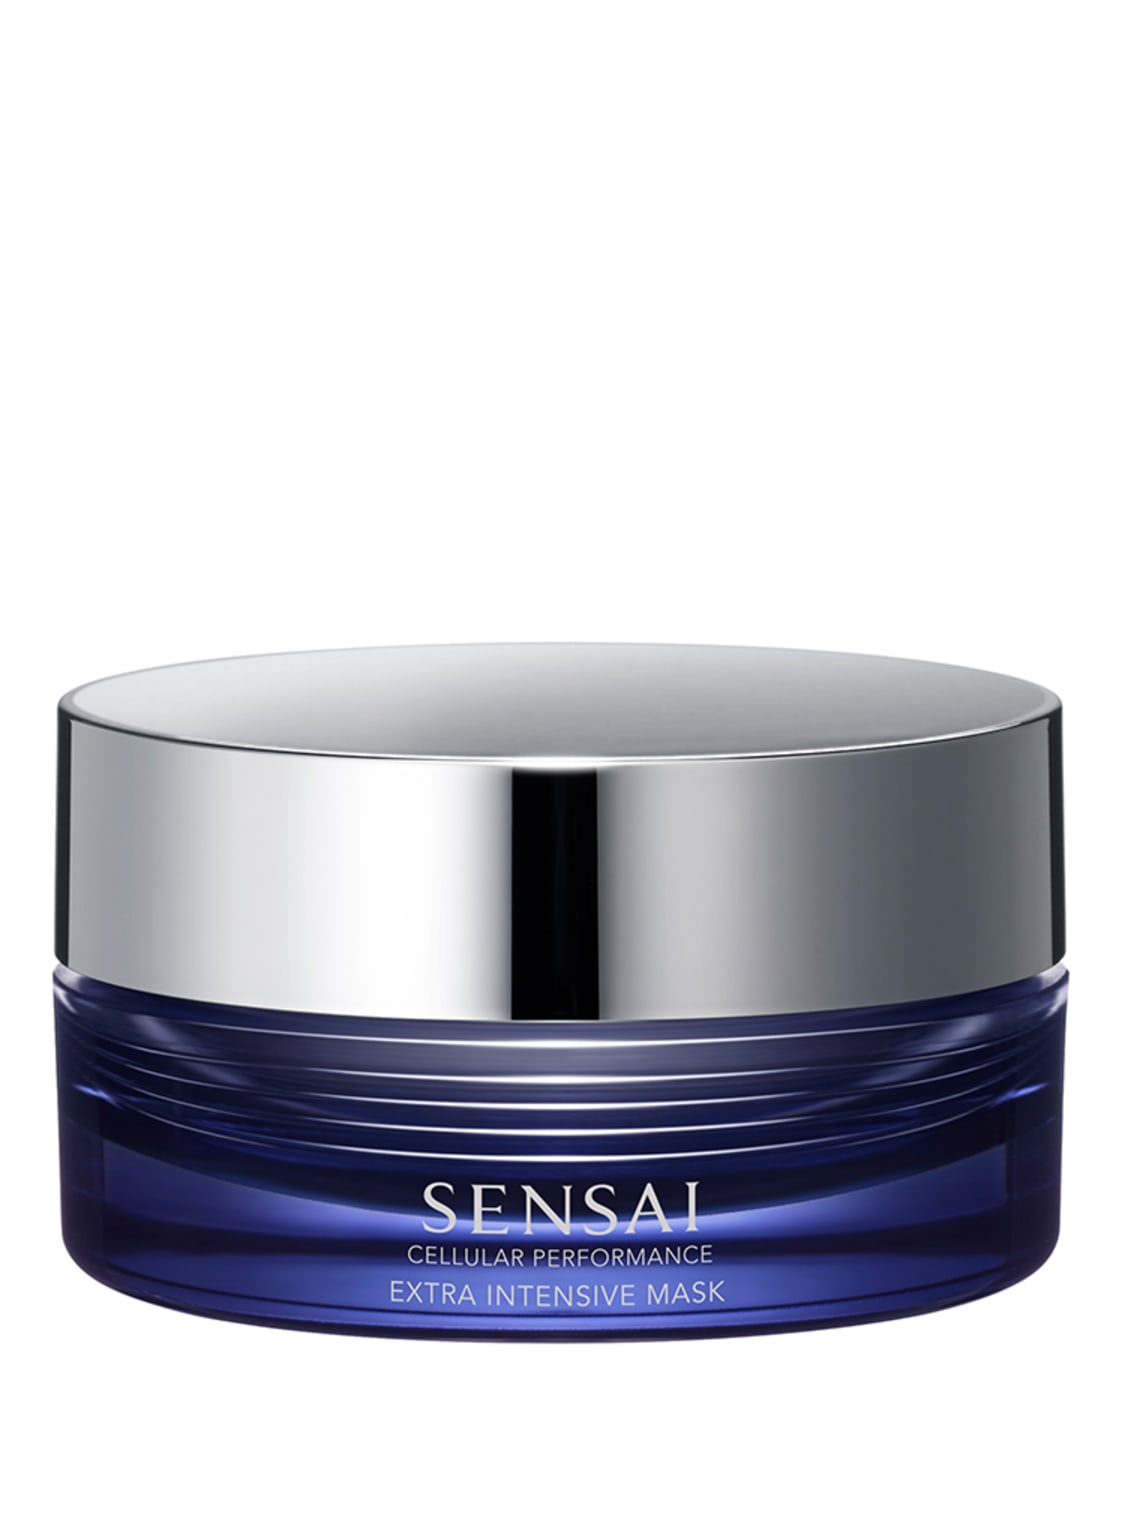 Sensai Cellular Performance Extra Intensive Mask 75 ml von Sensai